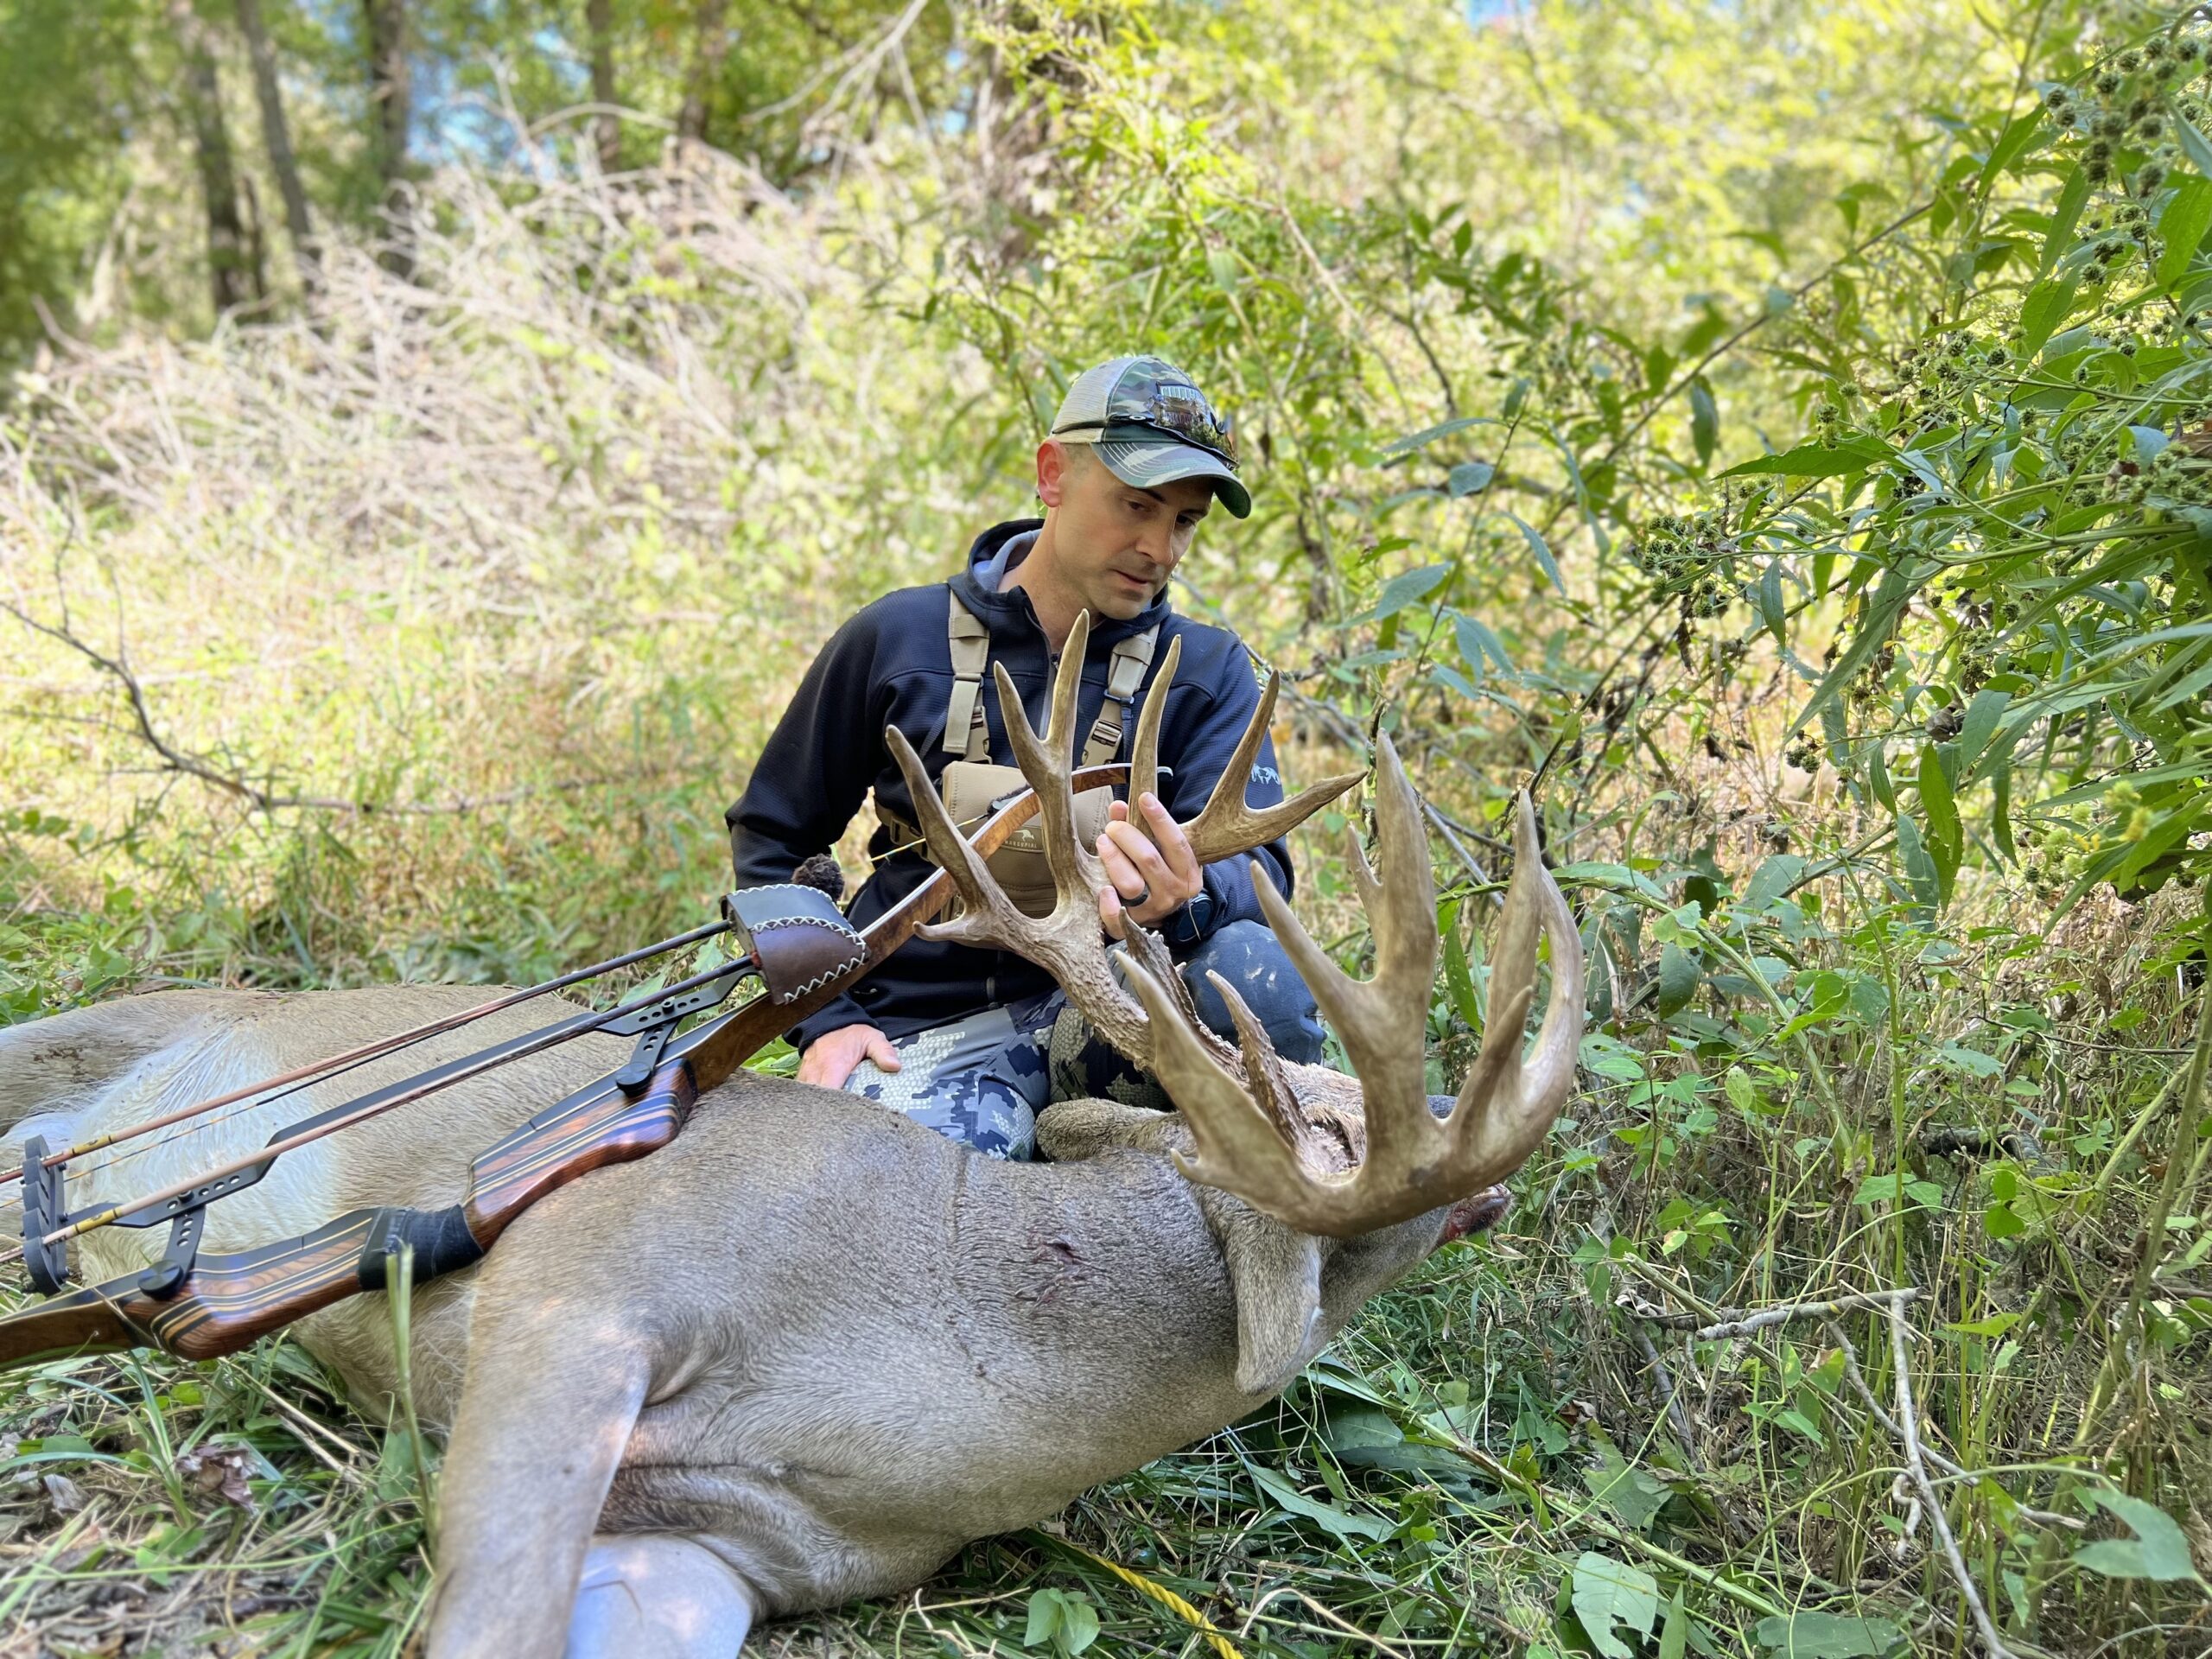 Missouri Recurve Hunter Tags Massive Buck That “Can't Be Killed”